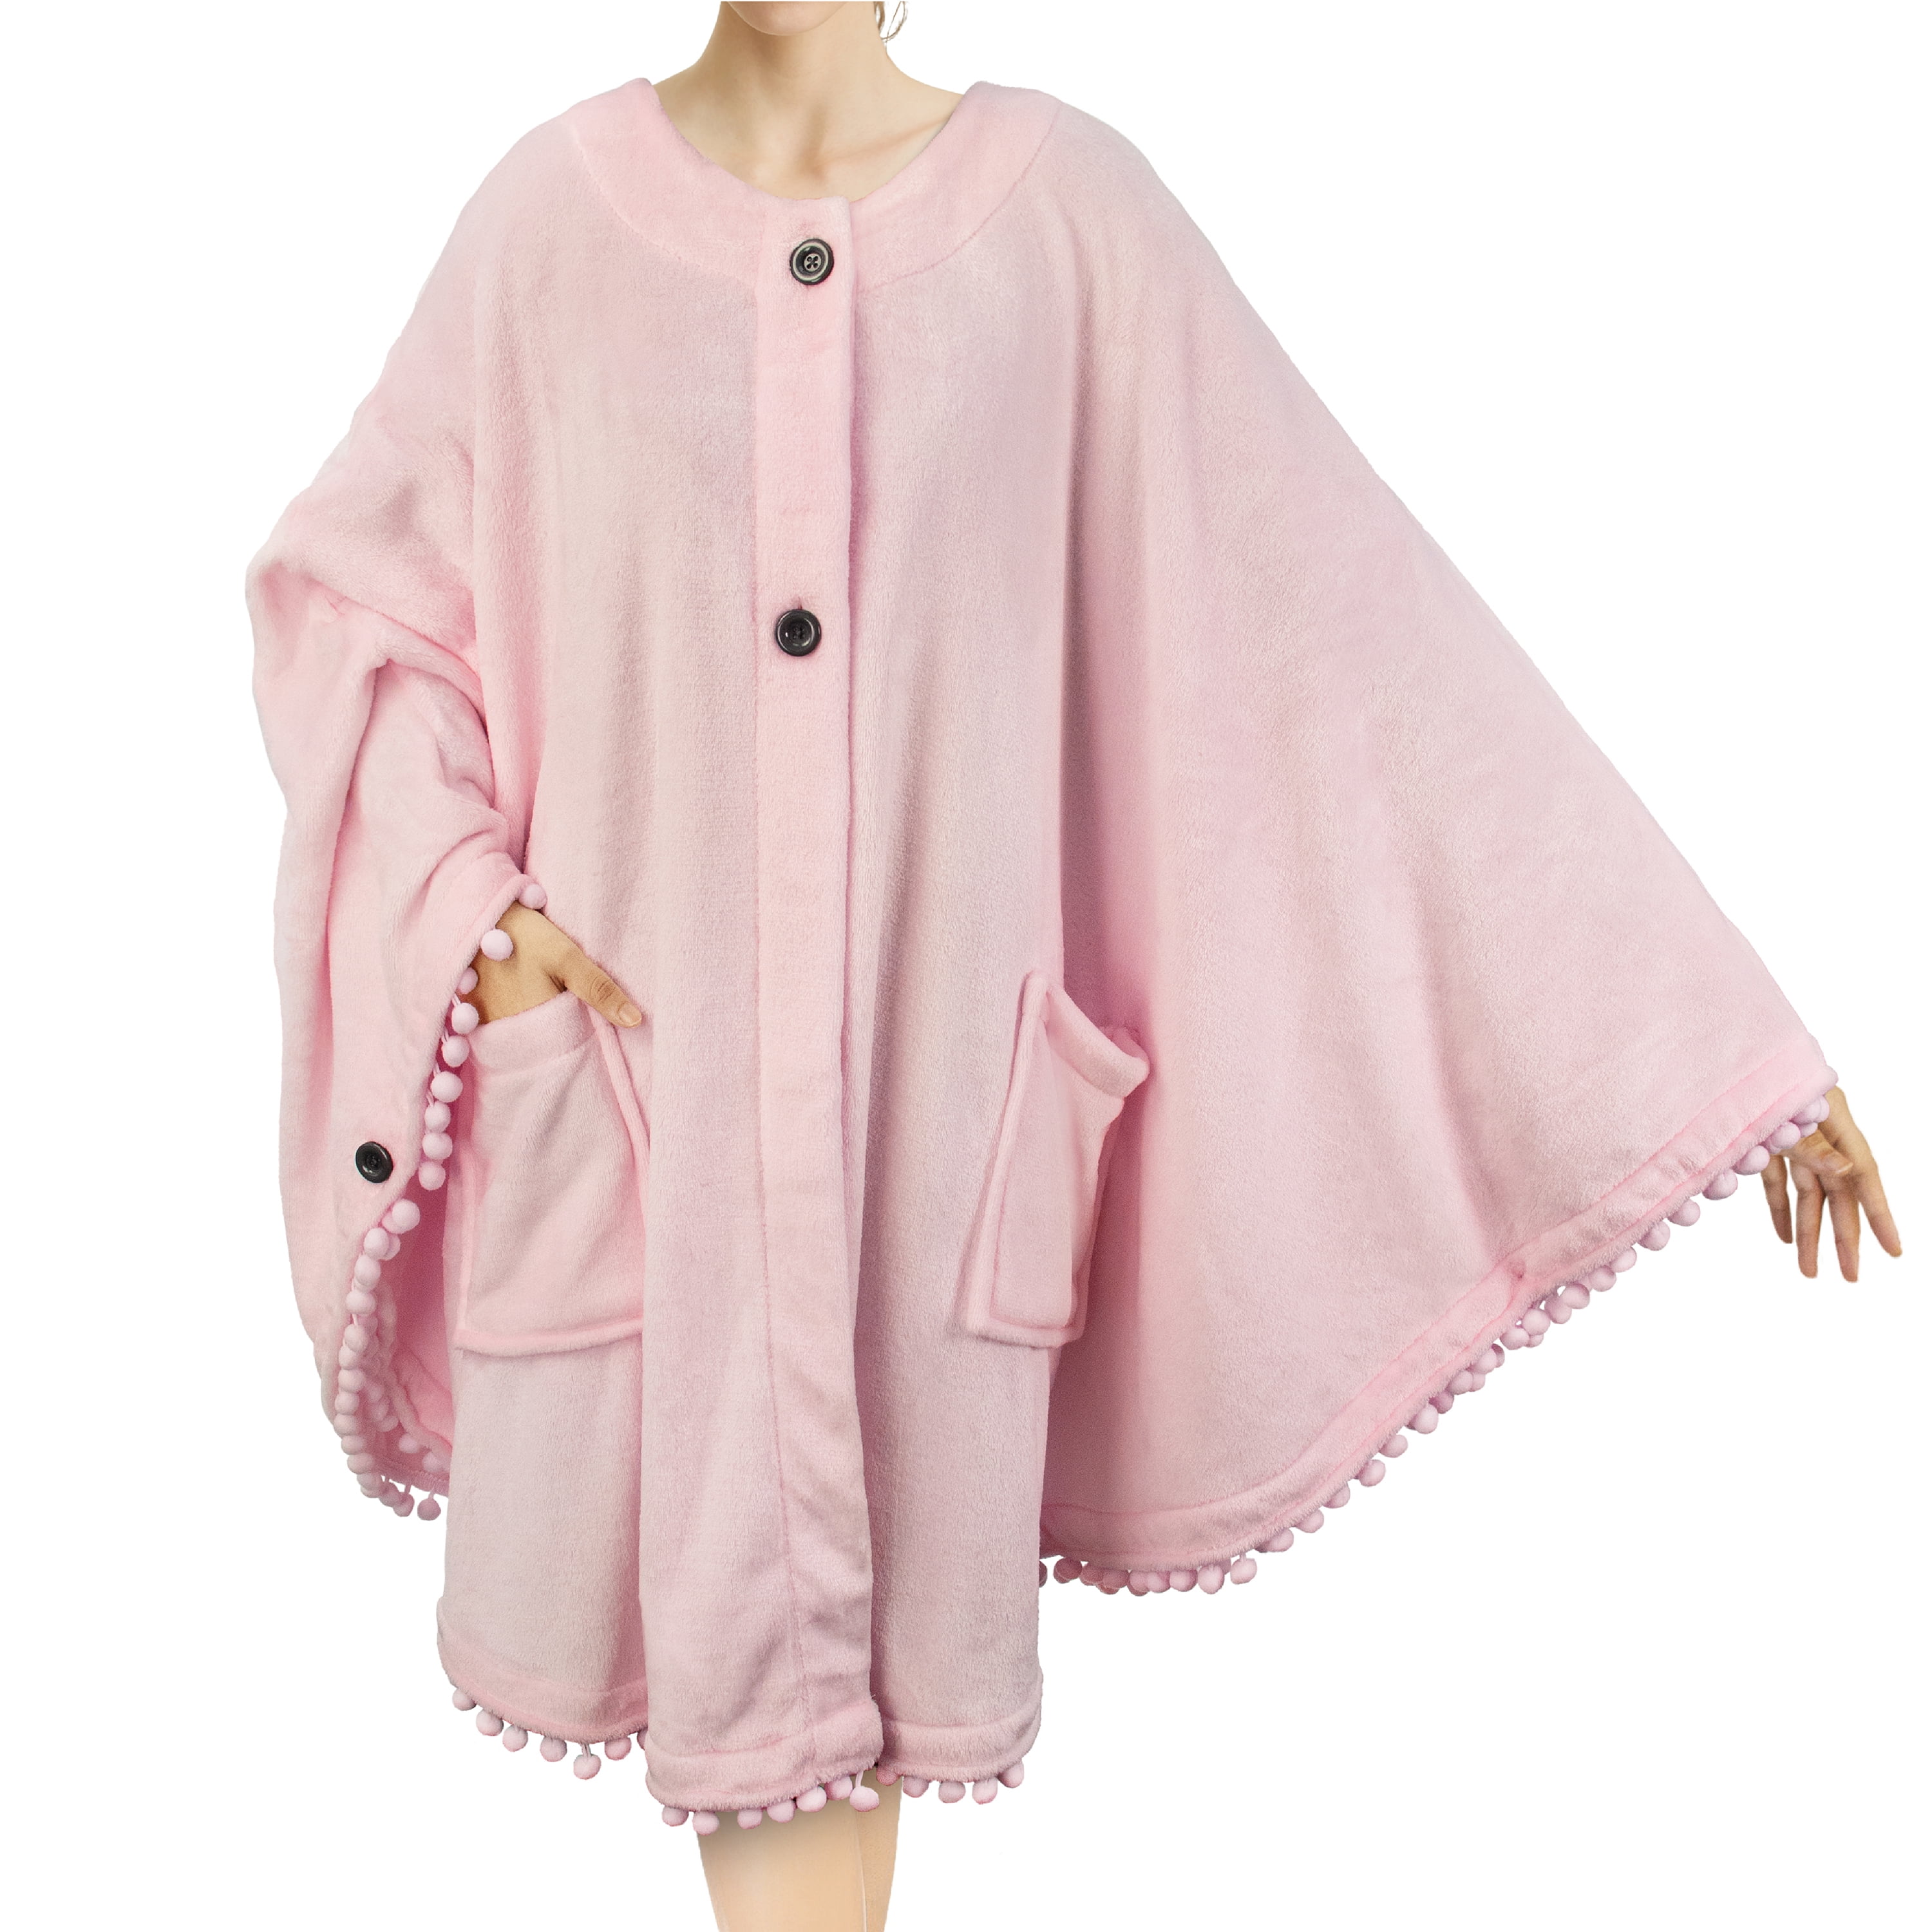 PAVILIA Angel Wrap Poncho Blanket for Women